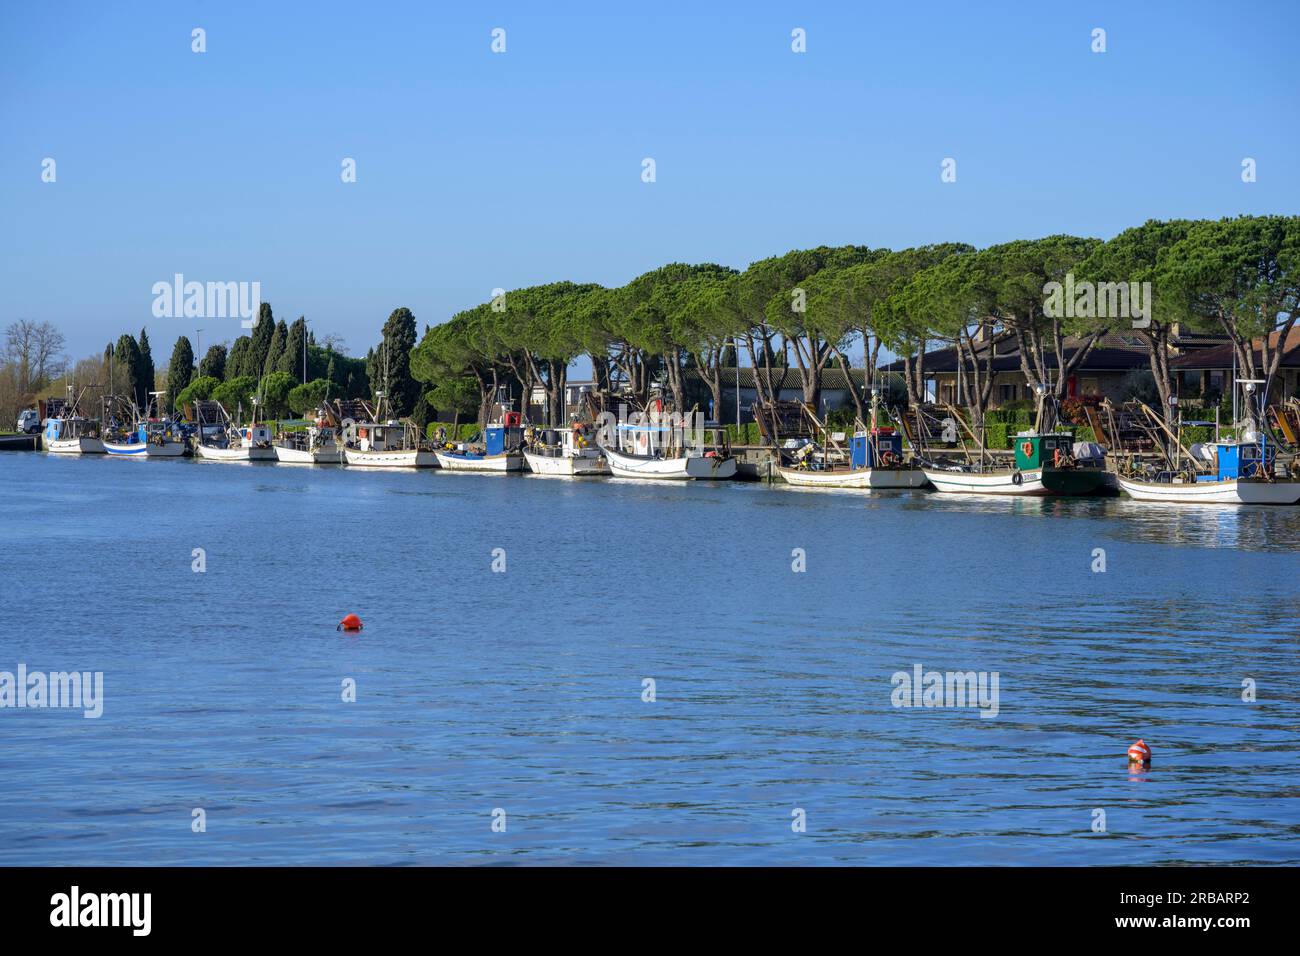 Fishing boats, Marano Lagunare, province of Udine, Italy Stock Photo